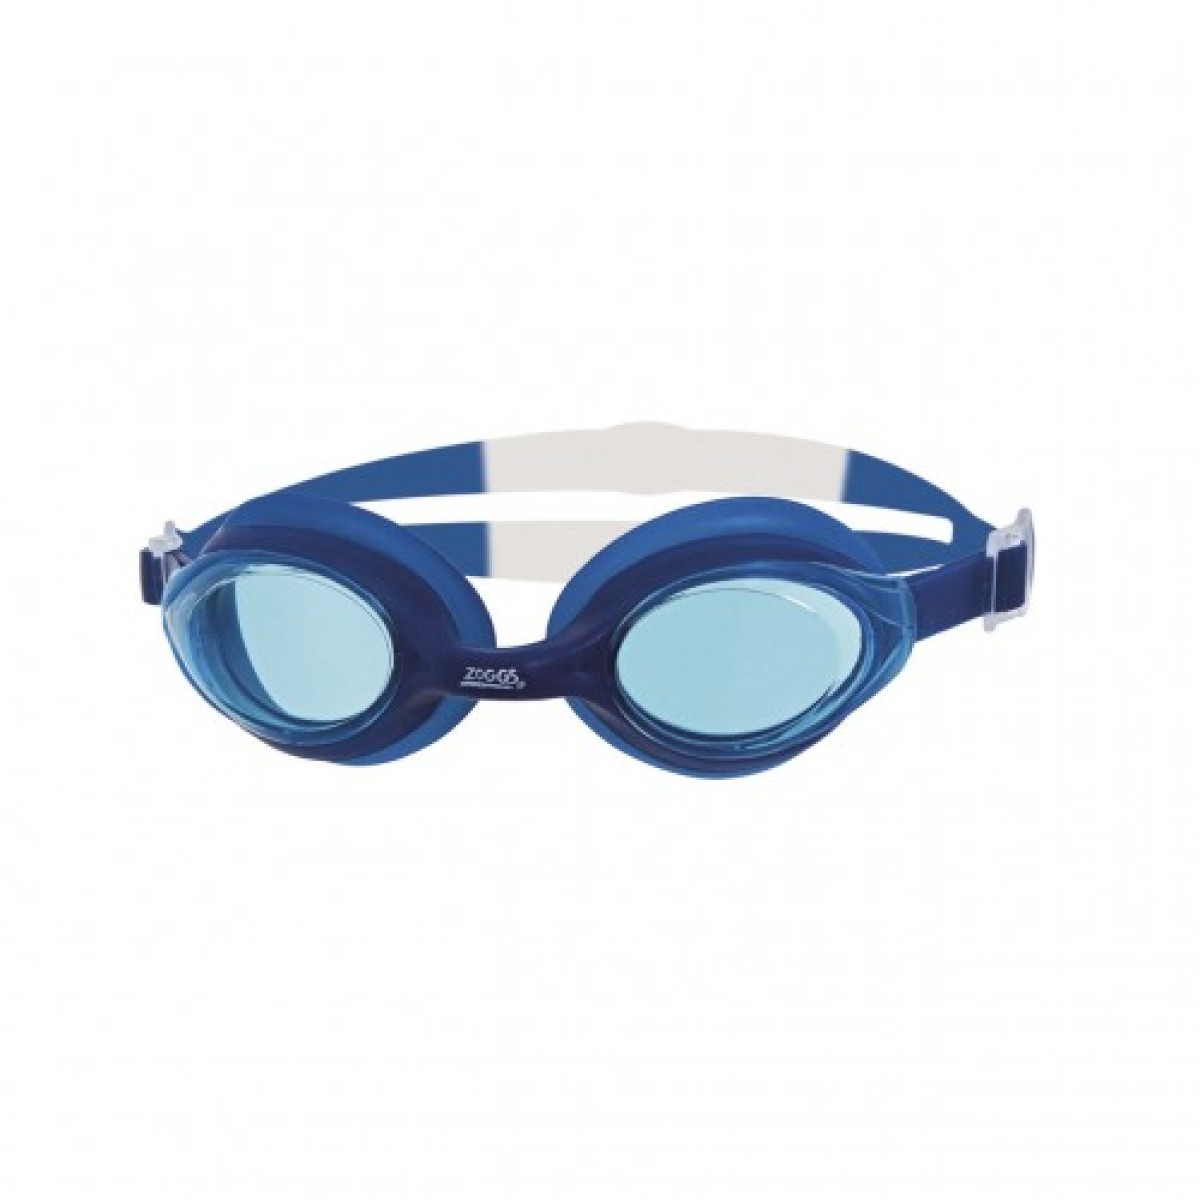 Swimming goggles Bondi blue/grey/clear ZOGGS - view 1